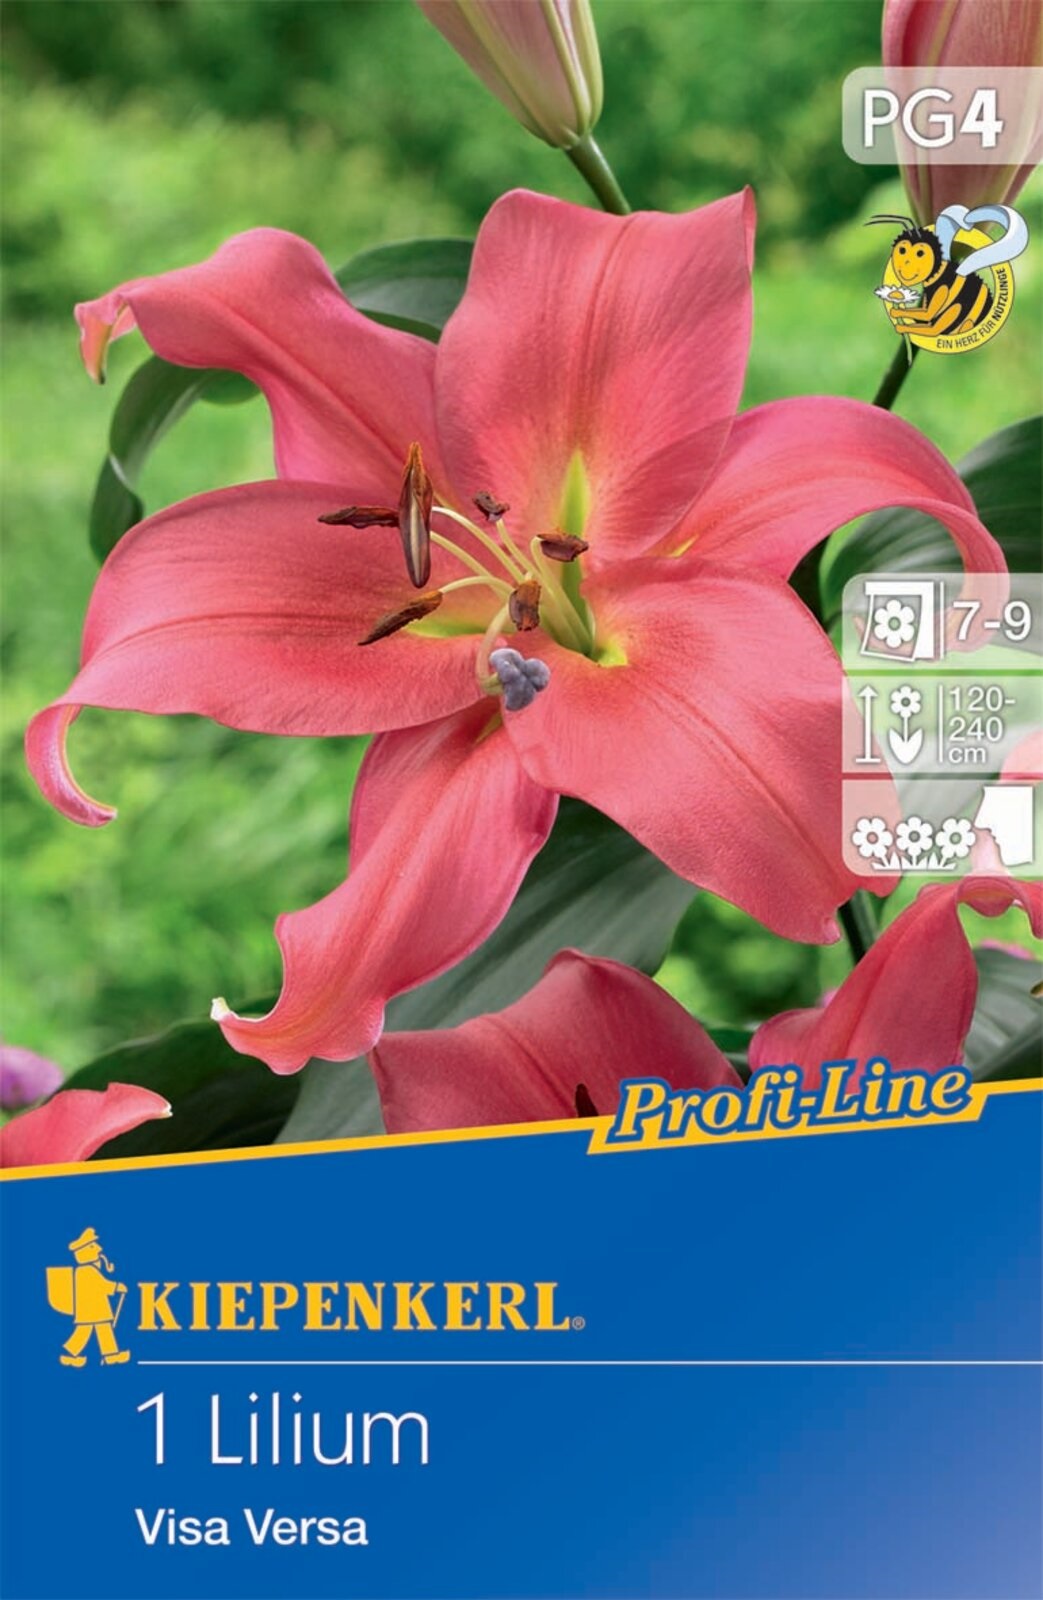 Flower bulb Lily Visa Versa Profi-line Kiepenkerl 1 pc